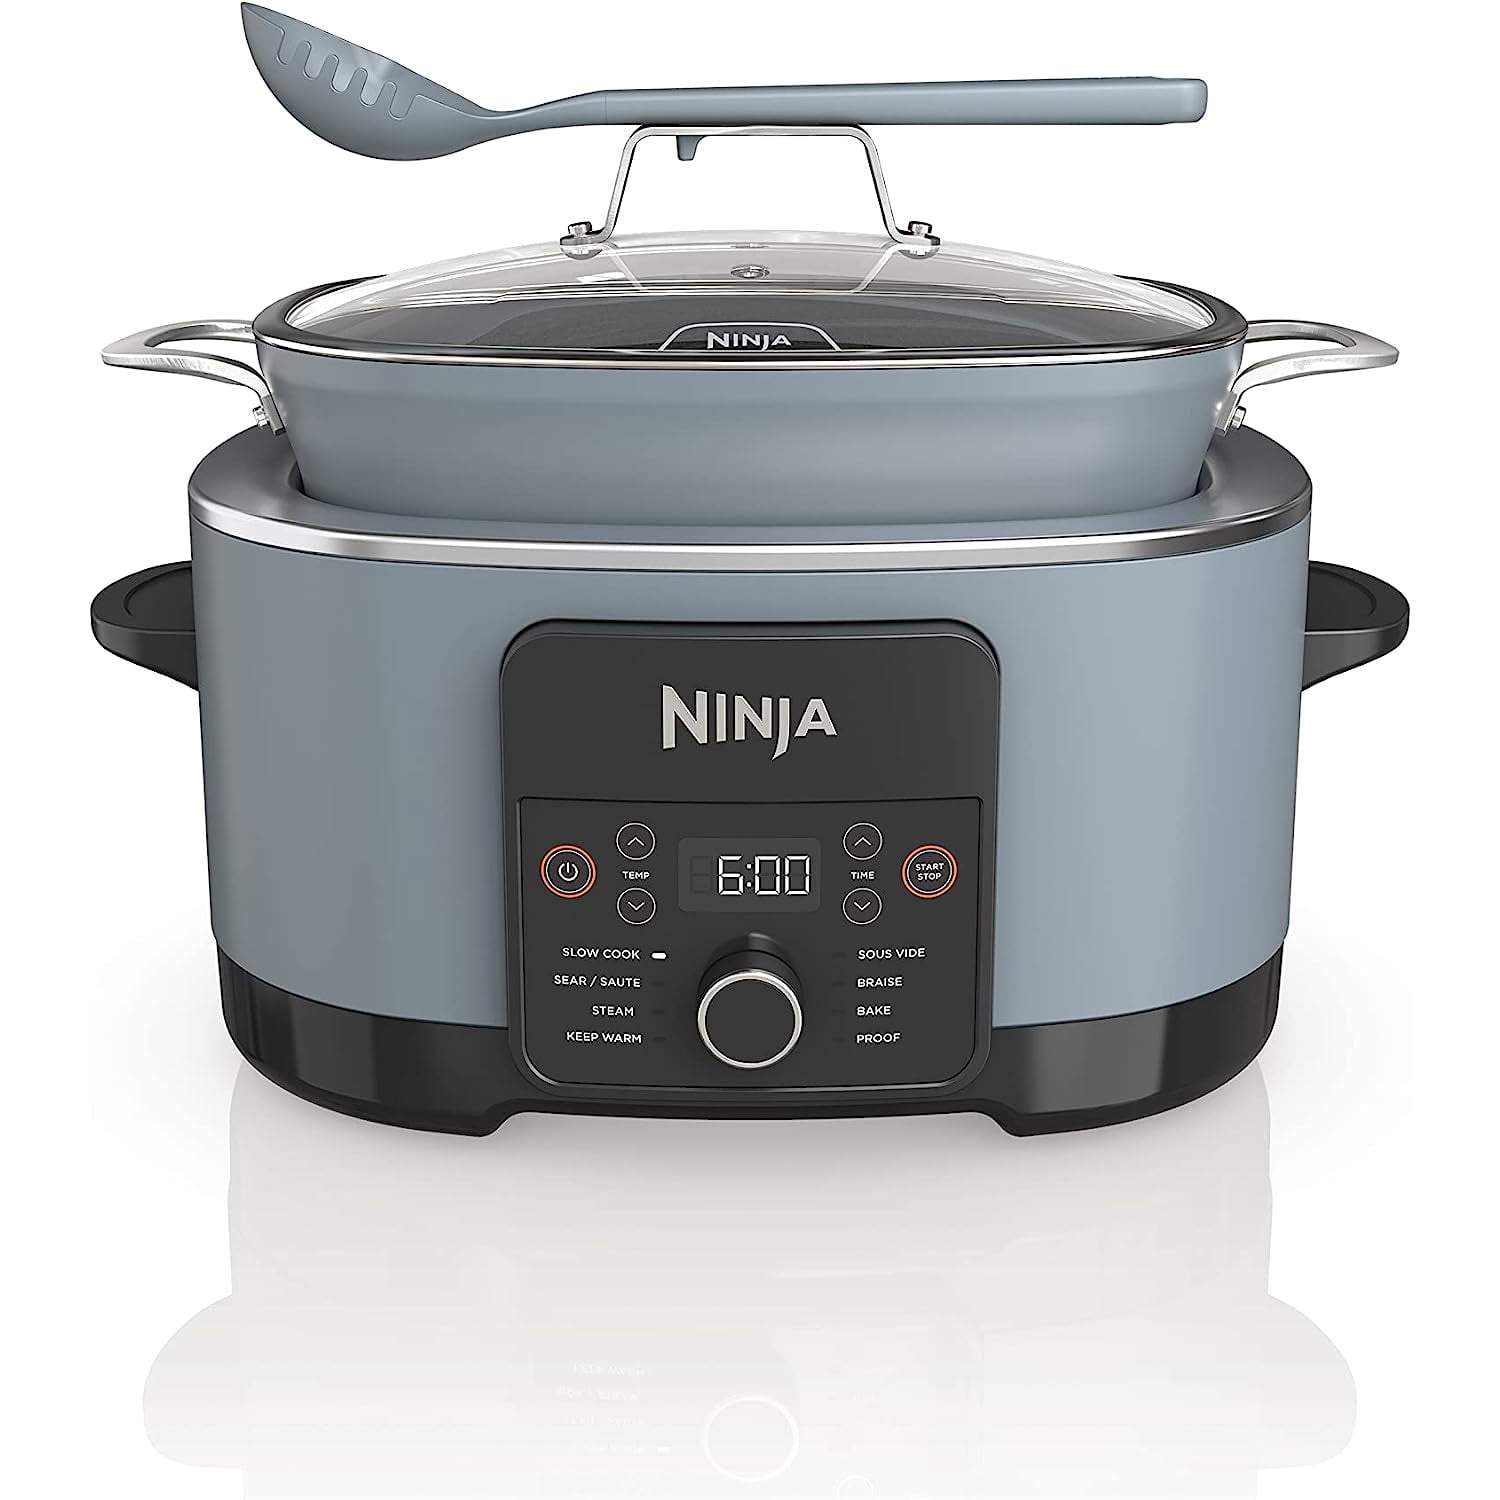 NINJA COMBI COOKER - appliances - by owner - sale - craigslist